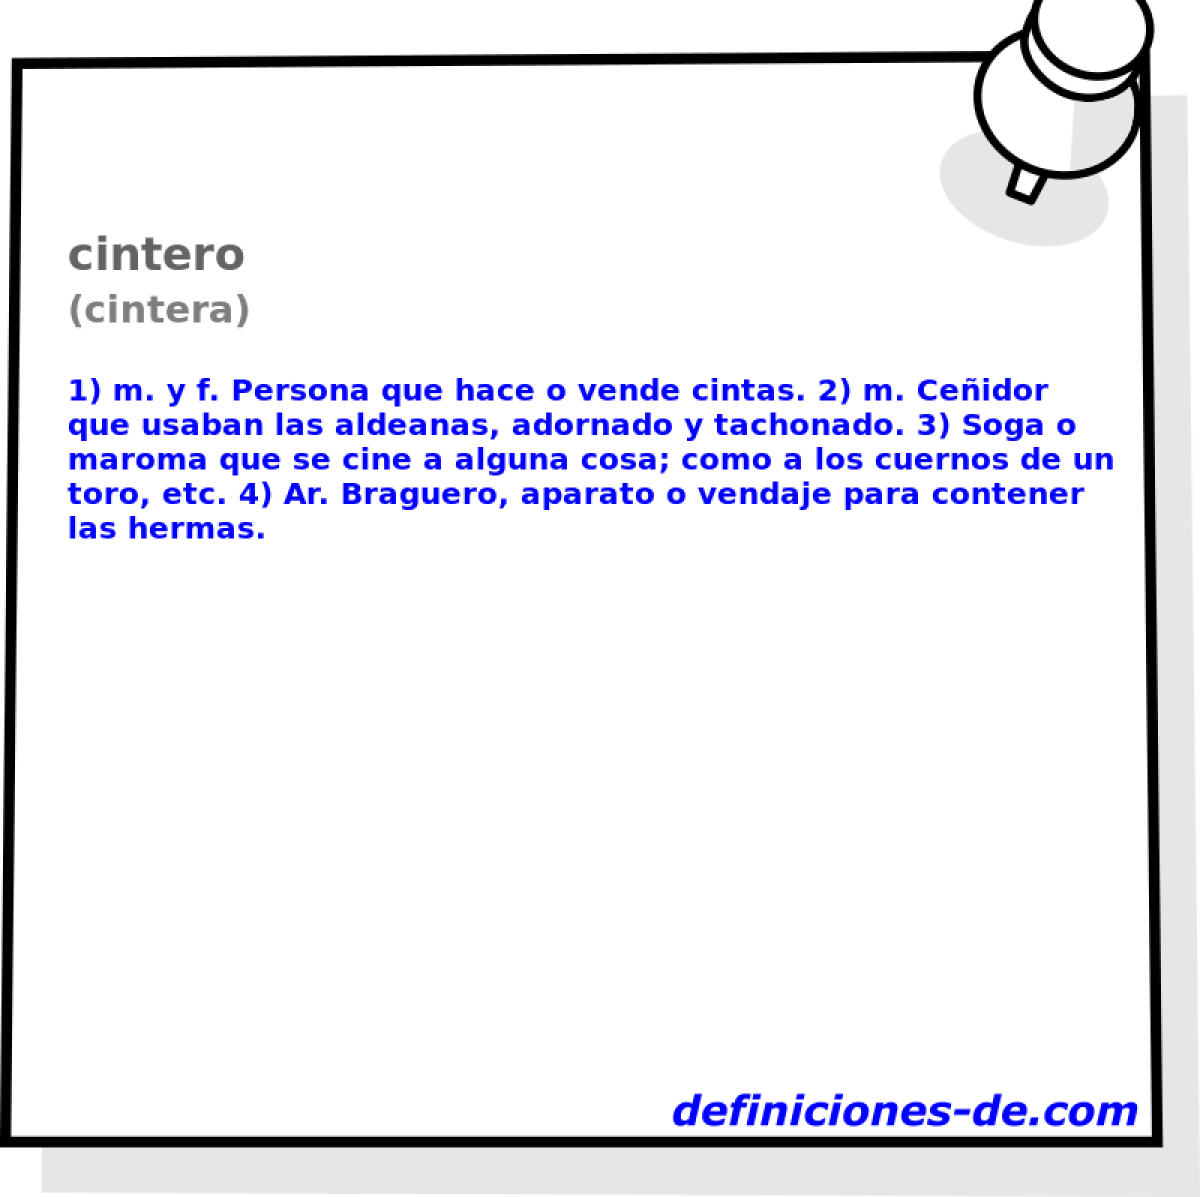 cintero (cintera)